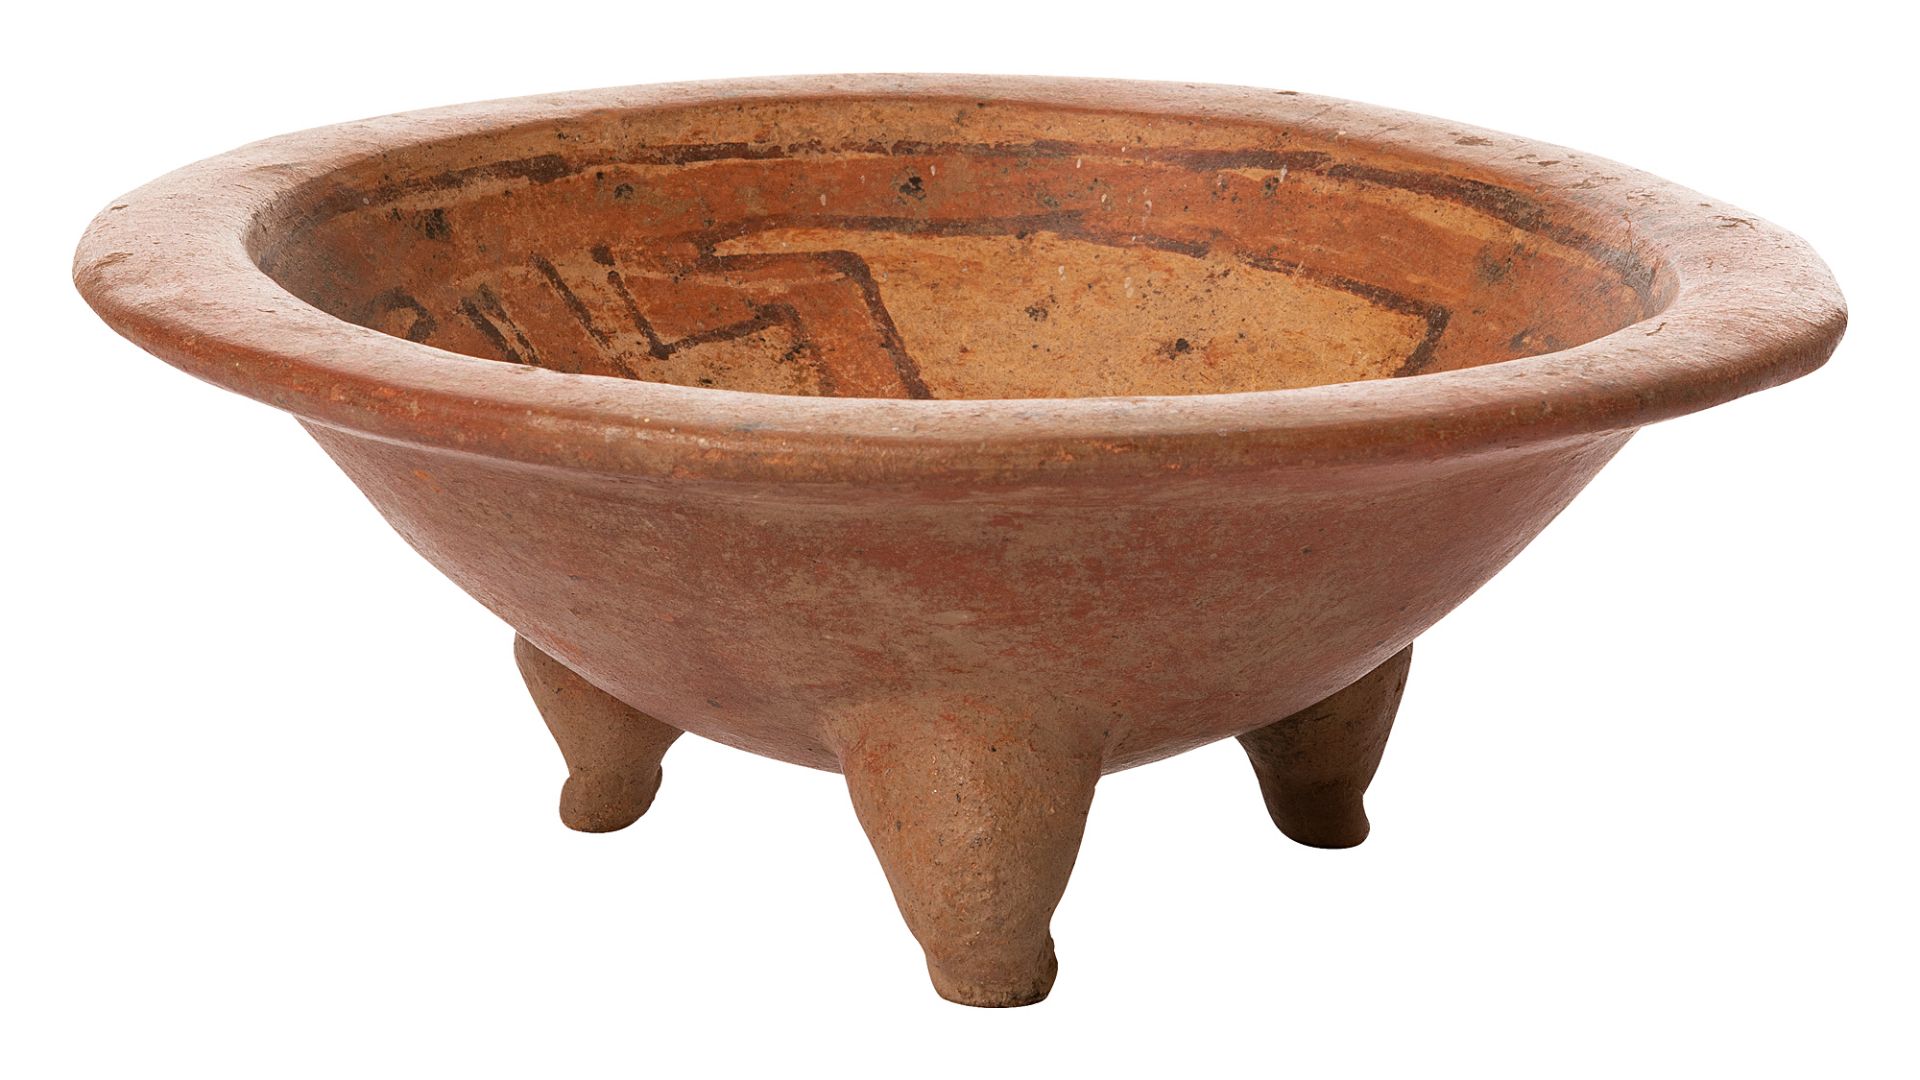 Tripod bowl with geometric pattern